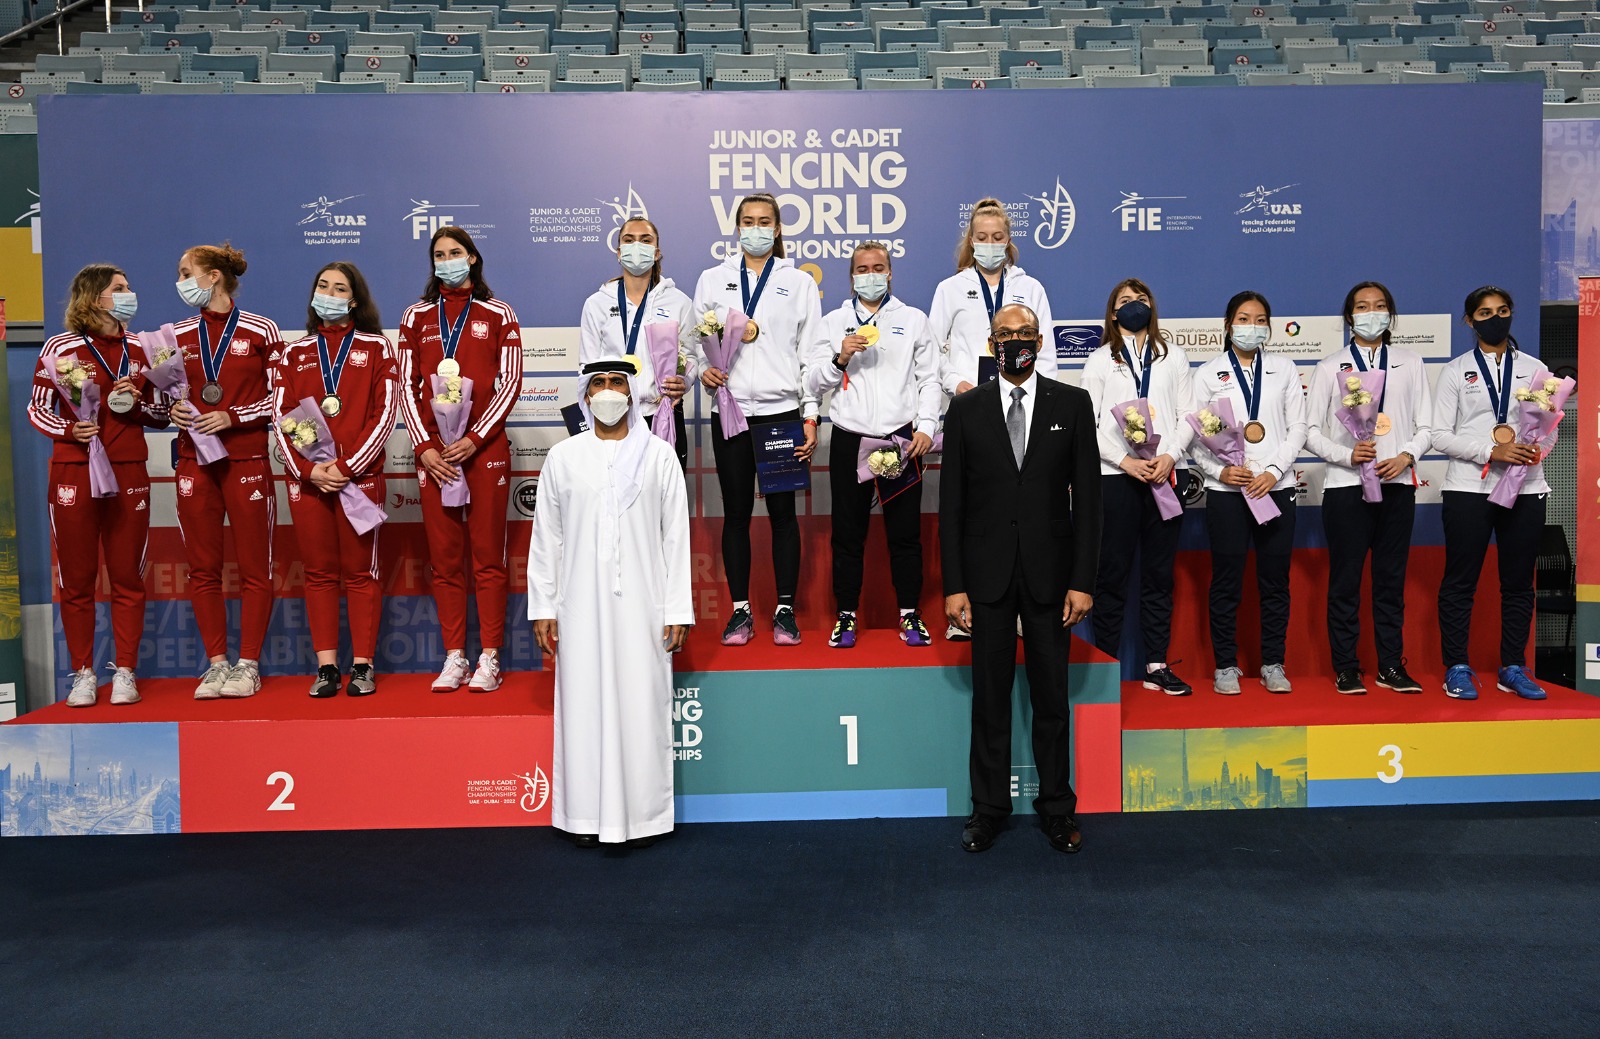 World Championships Dubai 2022